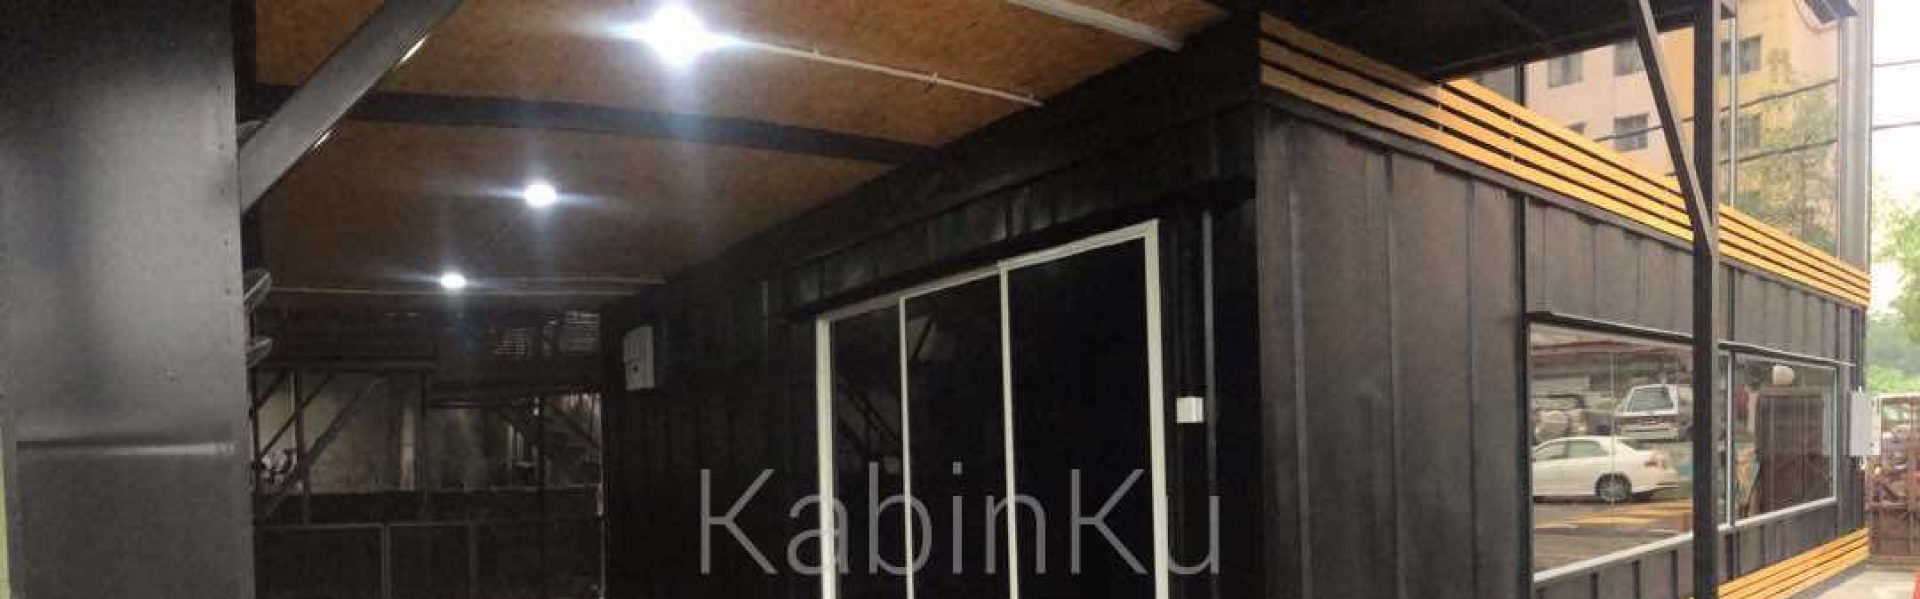 KabinKu Cabin & Container